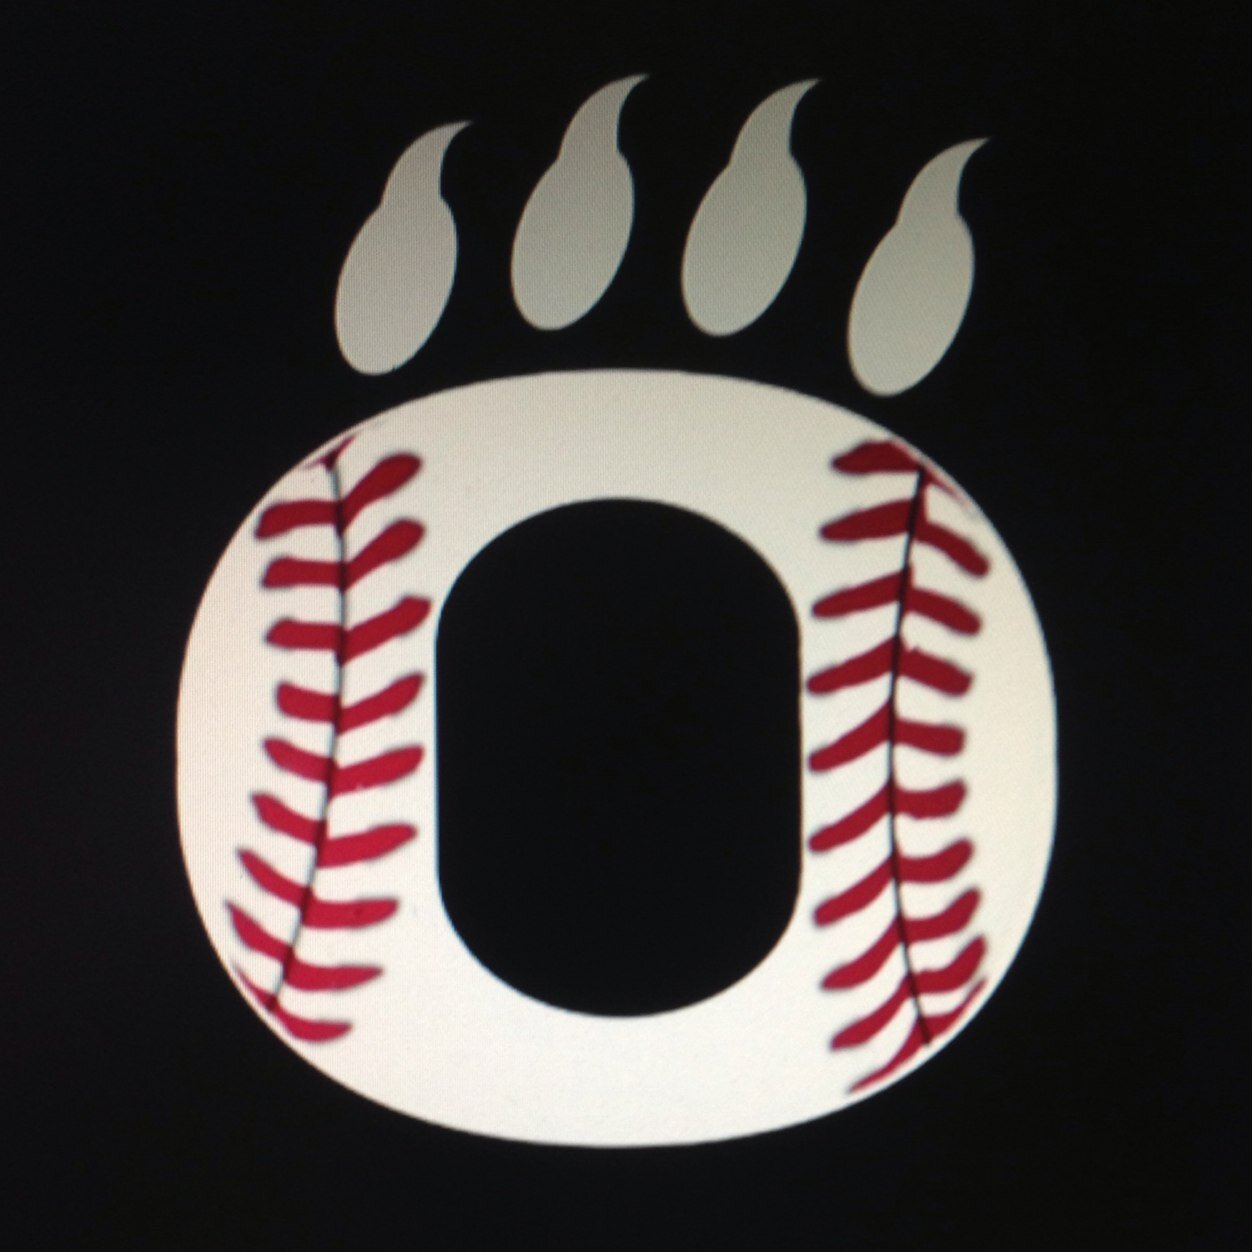 Official account of the Oakdale High School Baseball program.